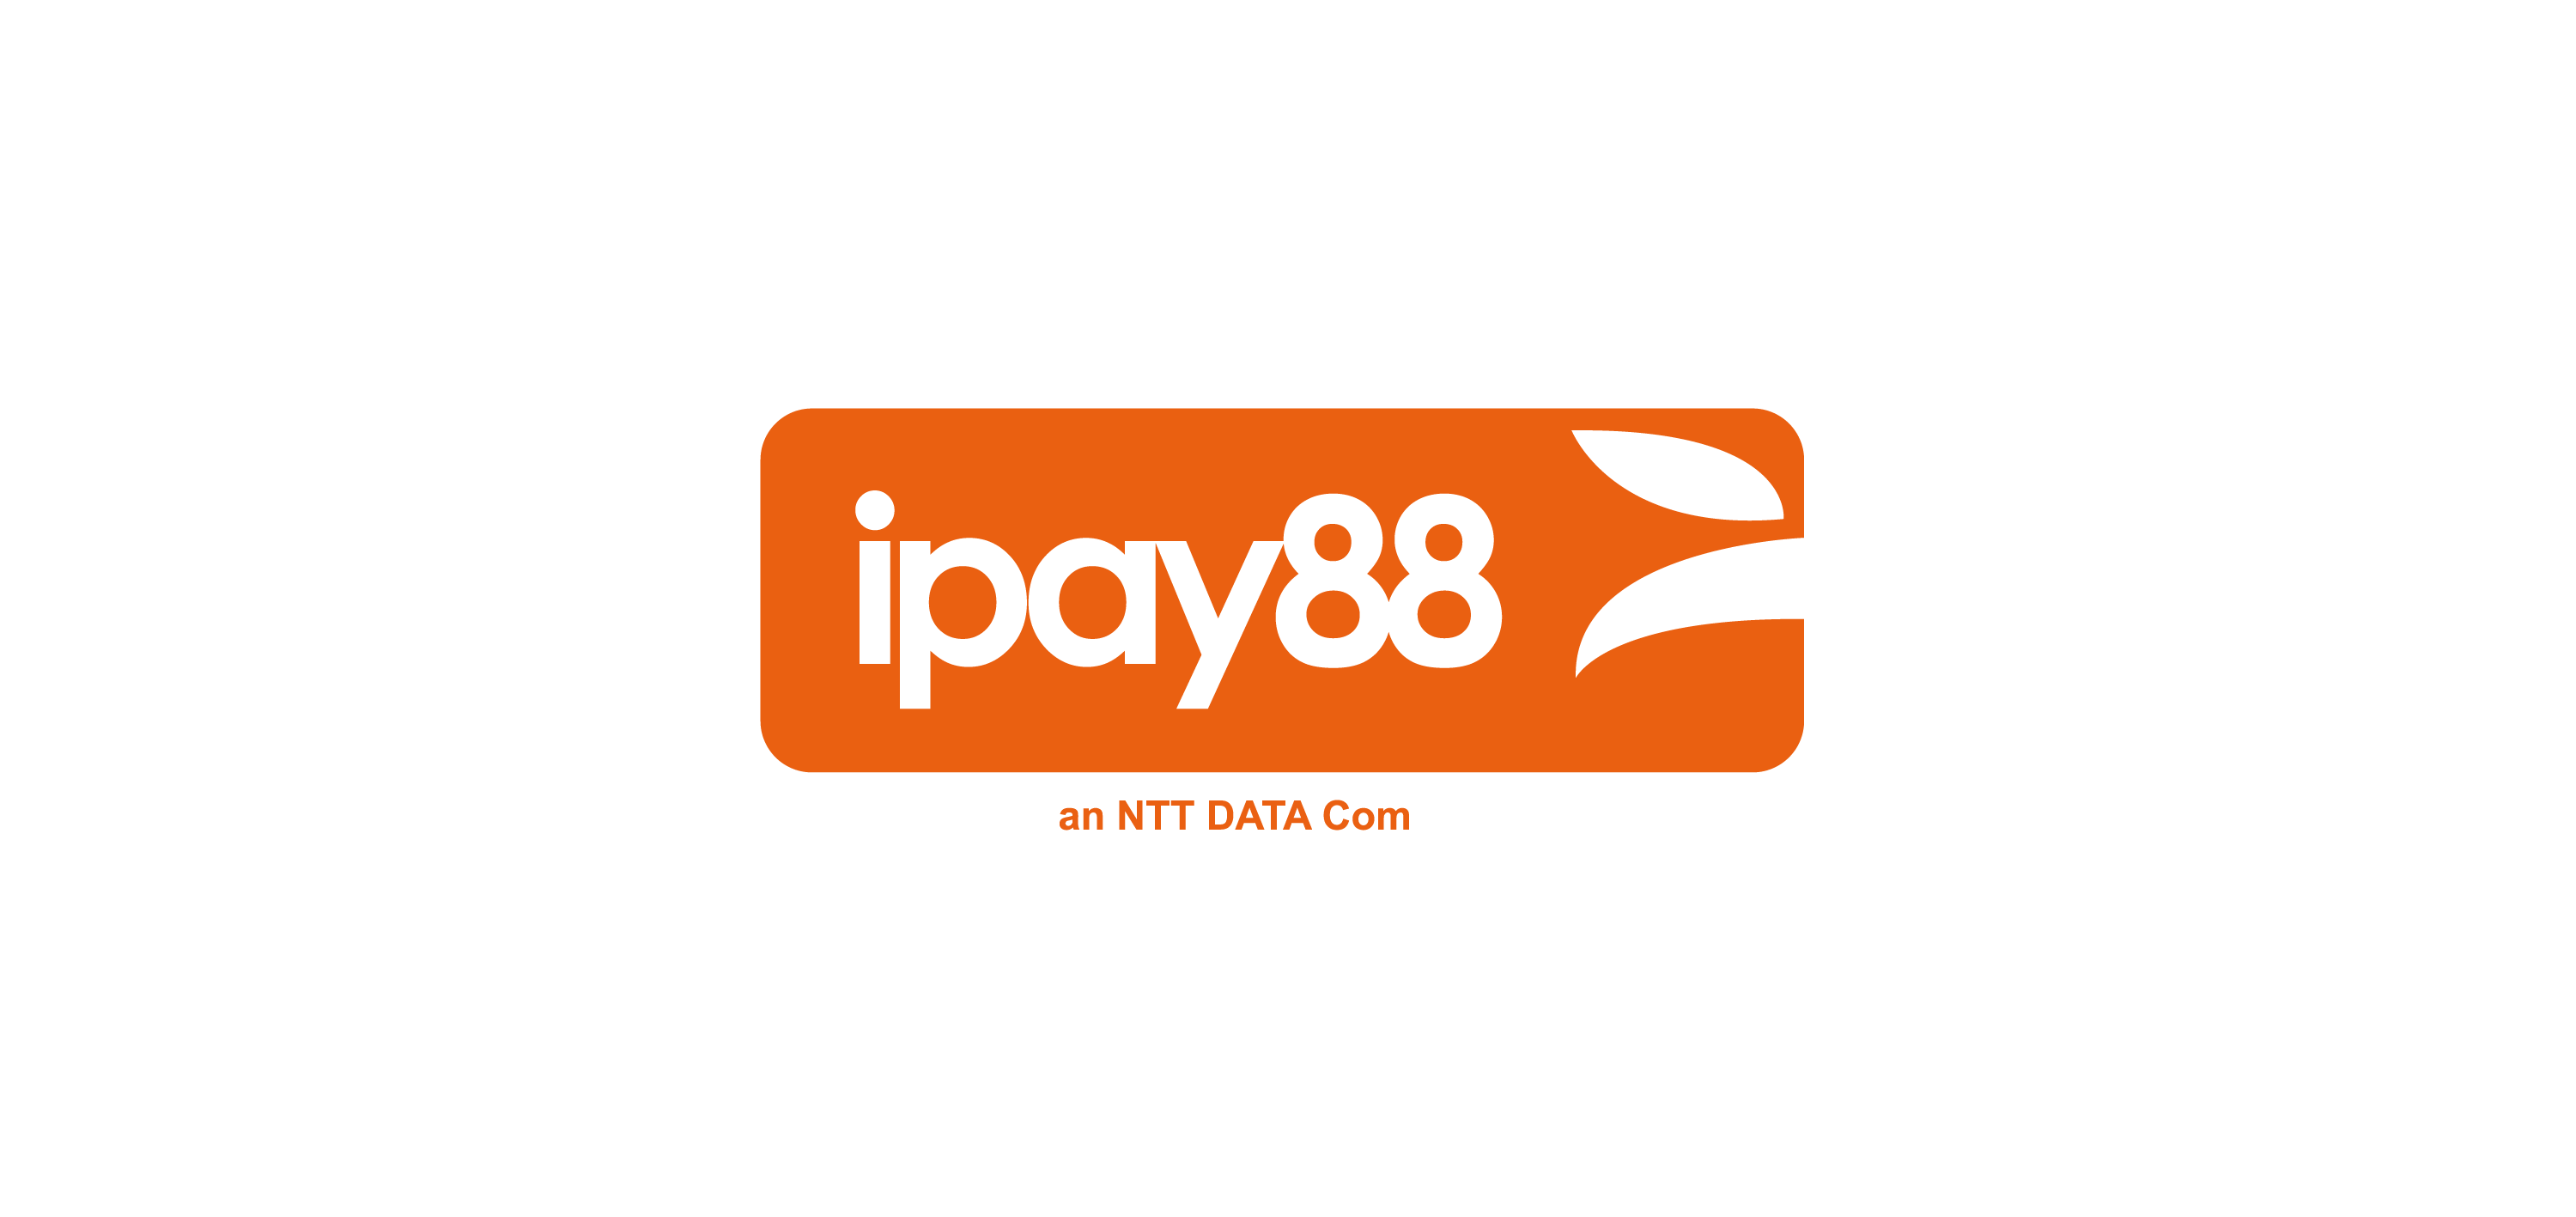 ipay88 logo vector